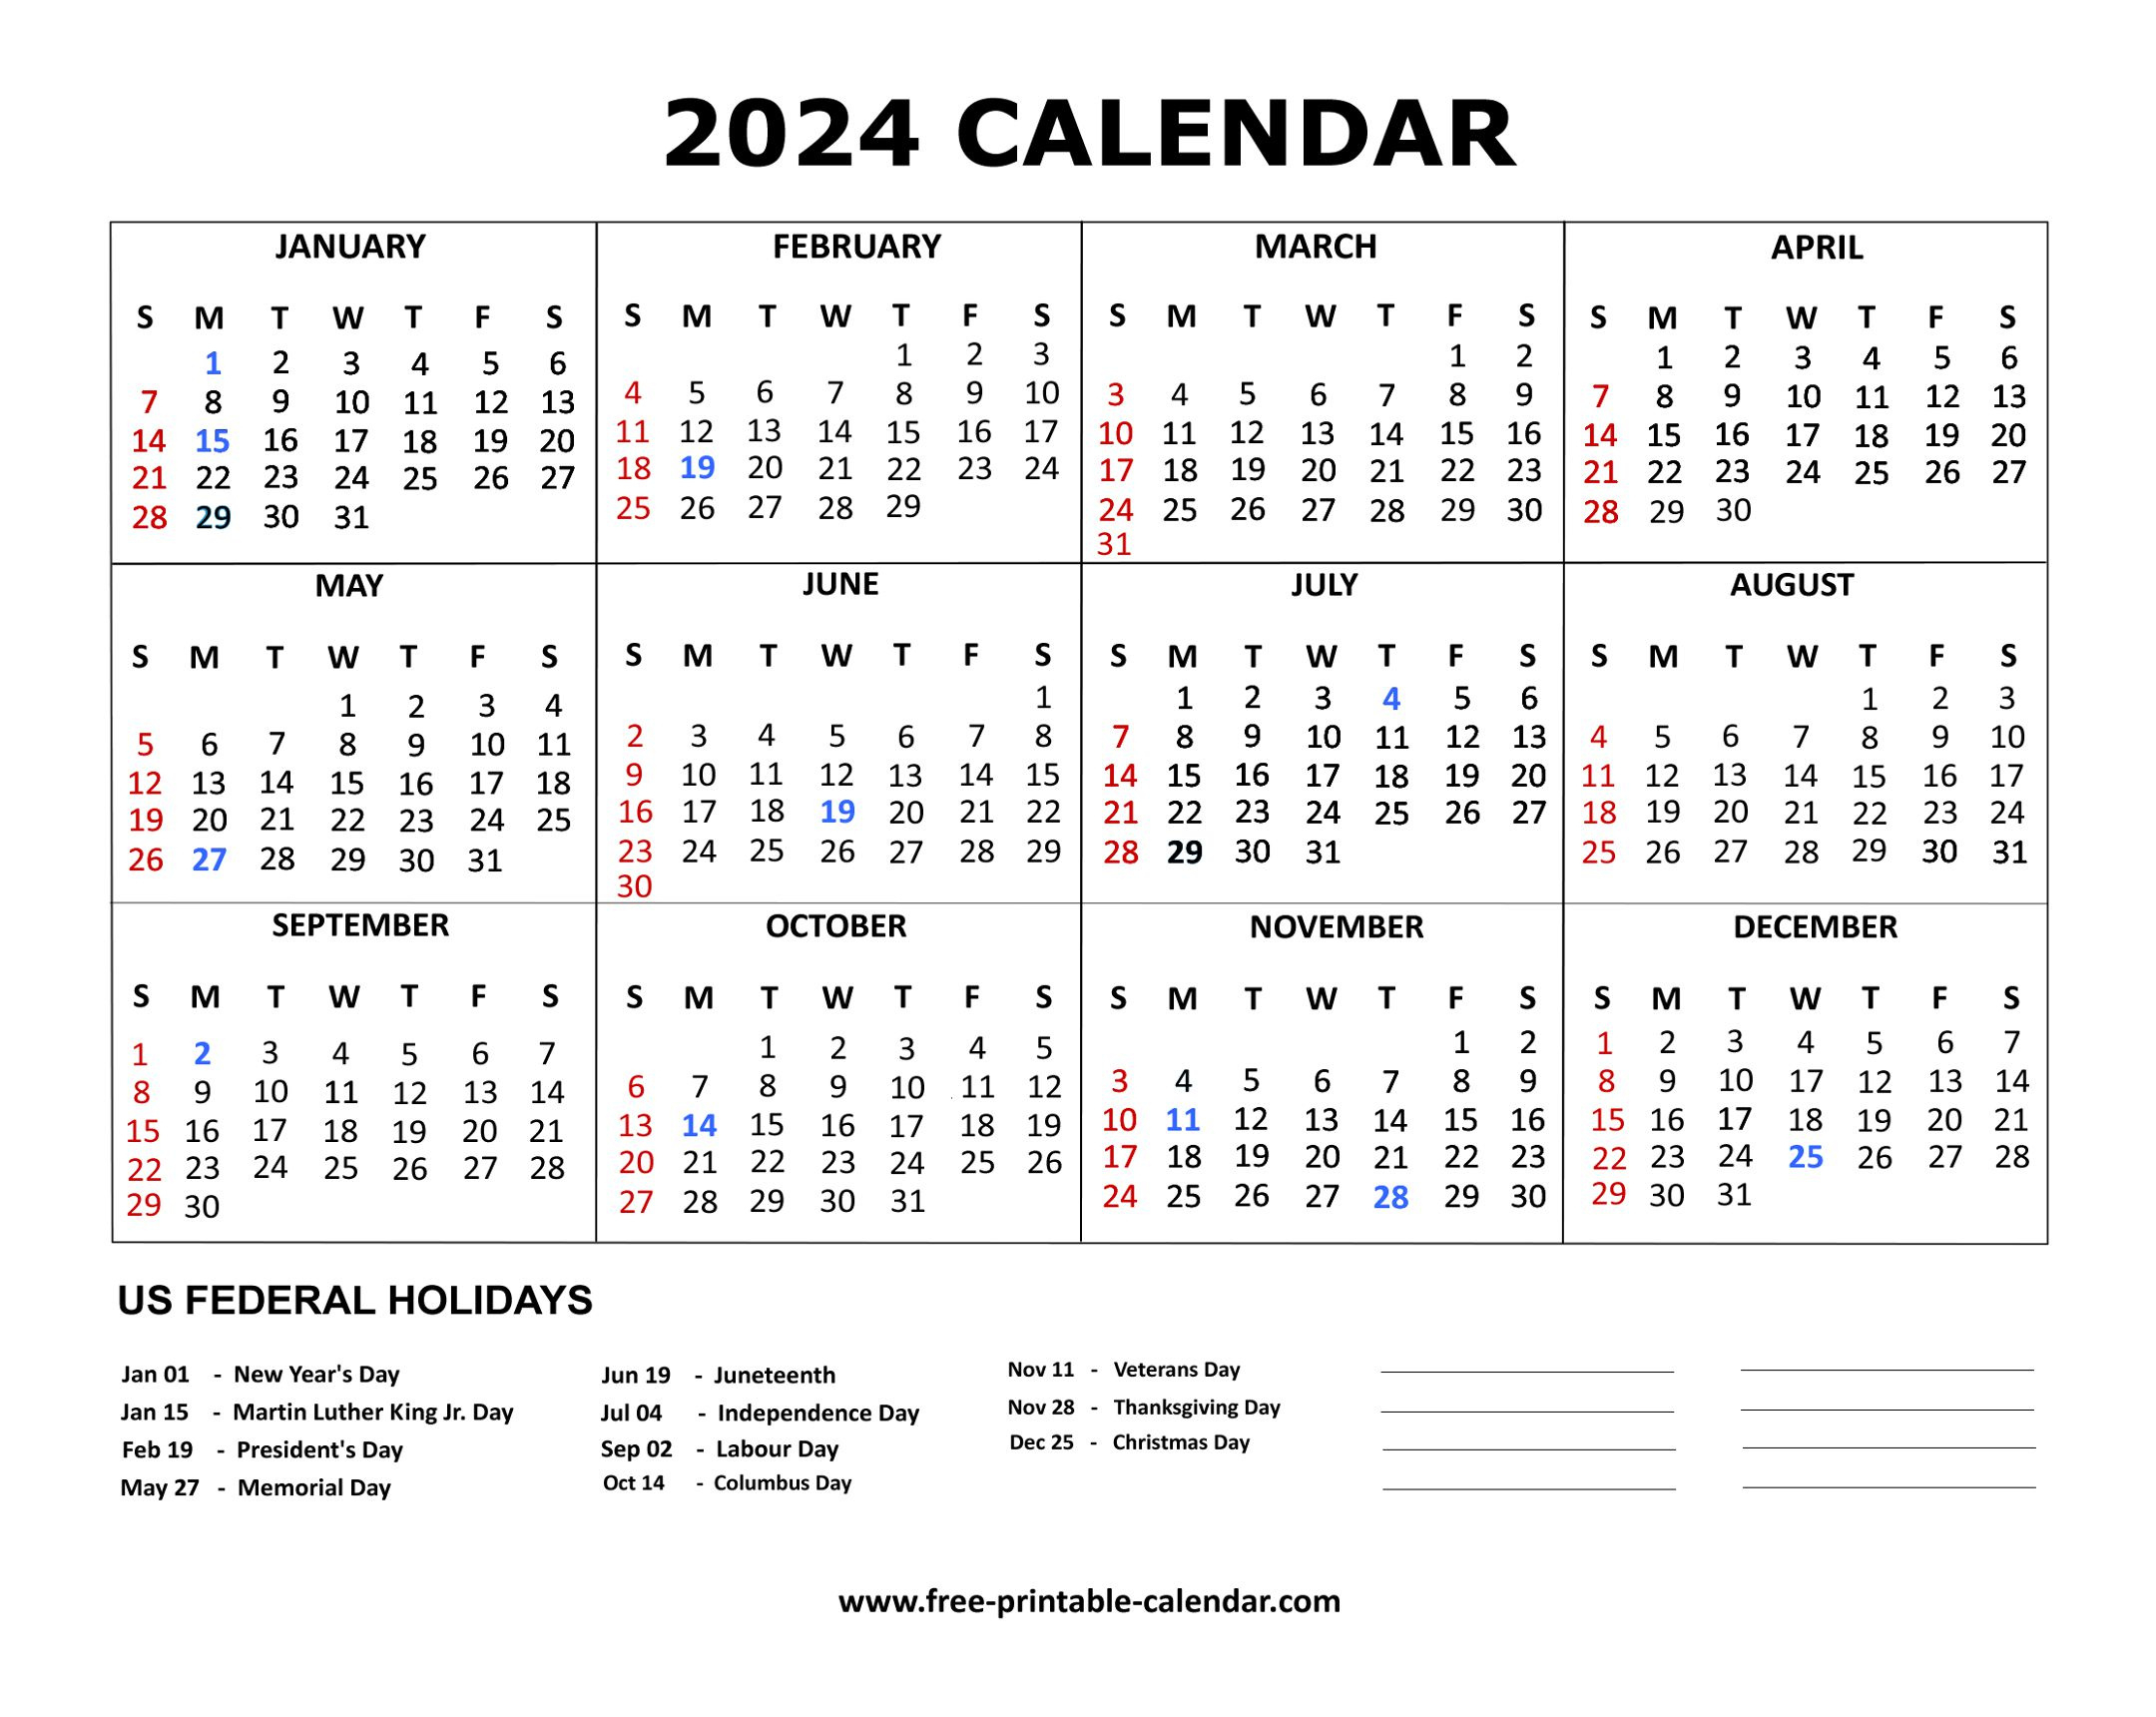 2024 Calendar in Free Printable Calendar 2024 With Federal Holidays